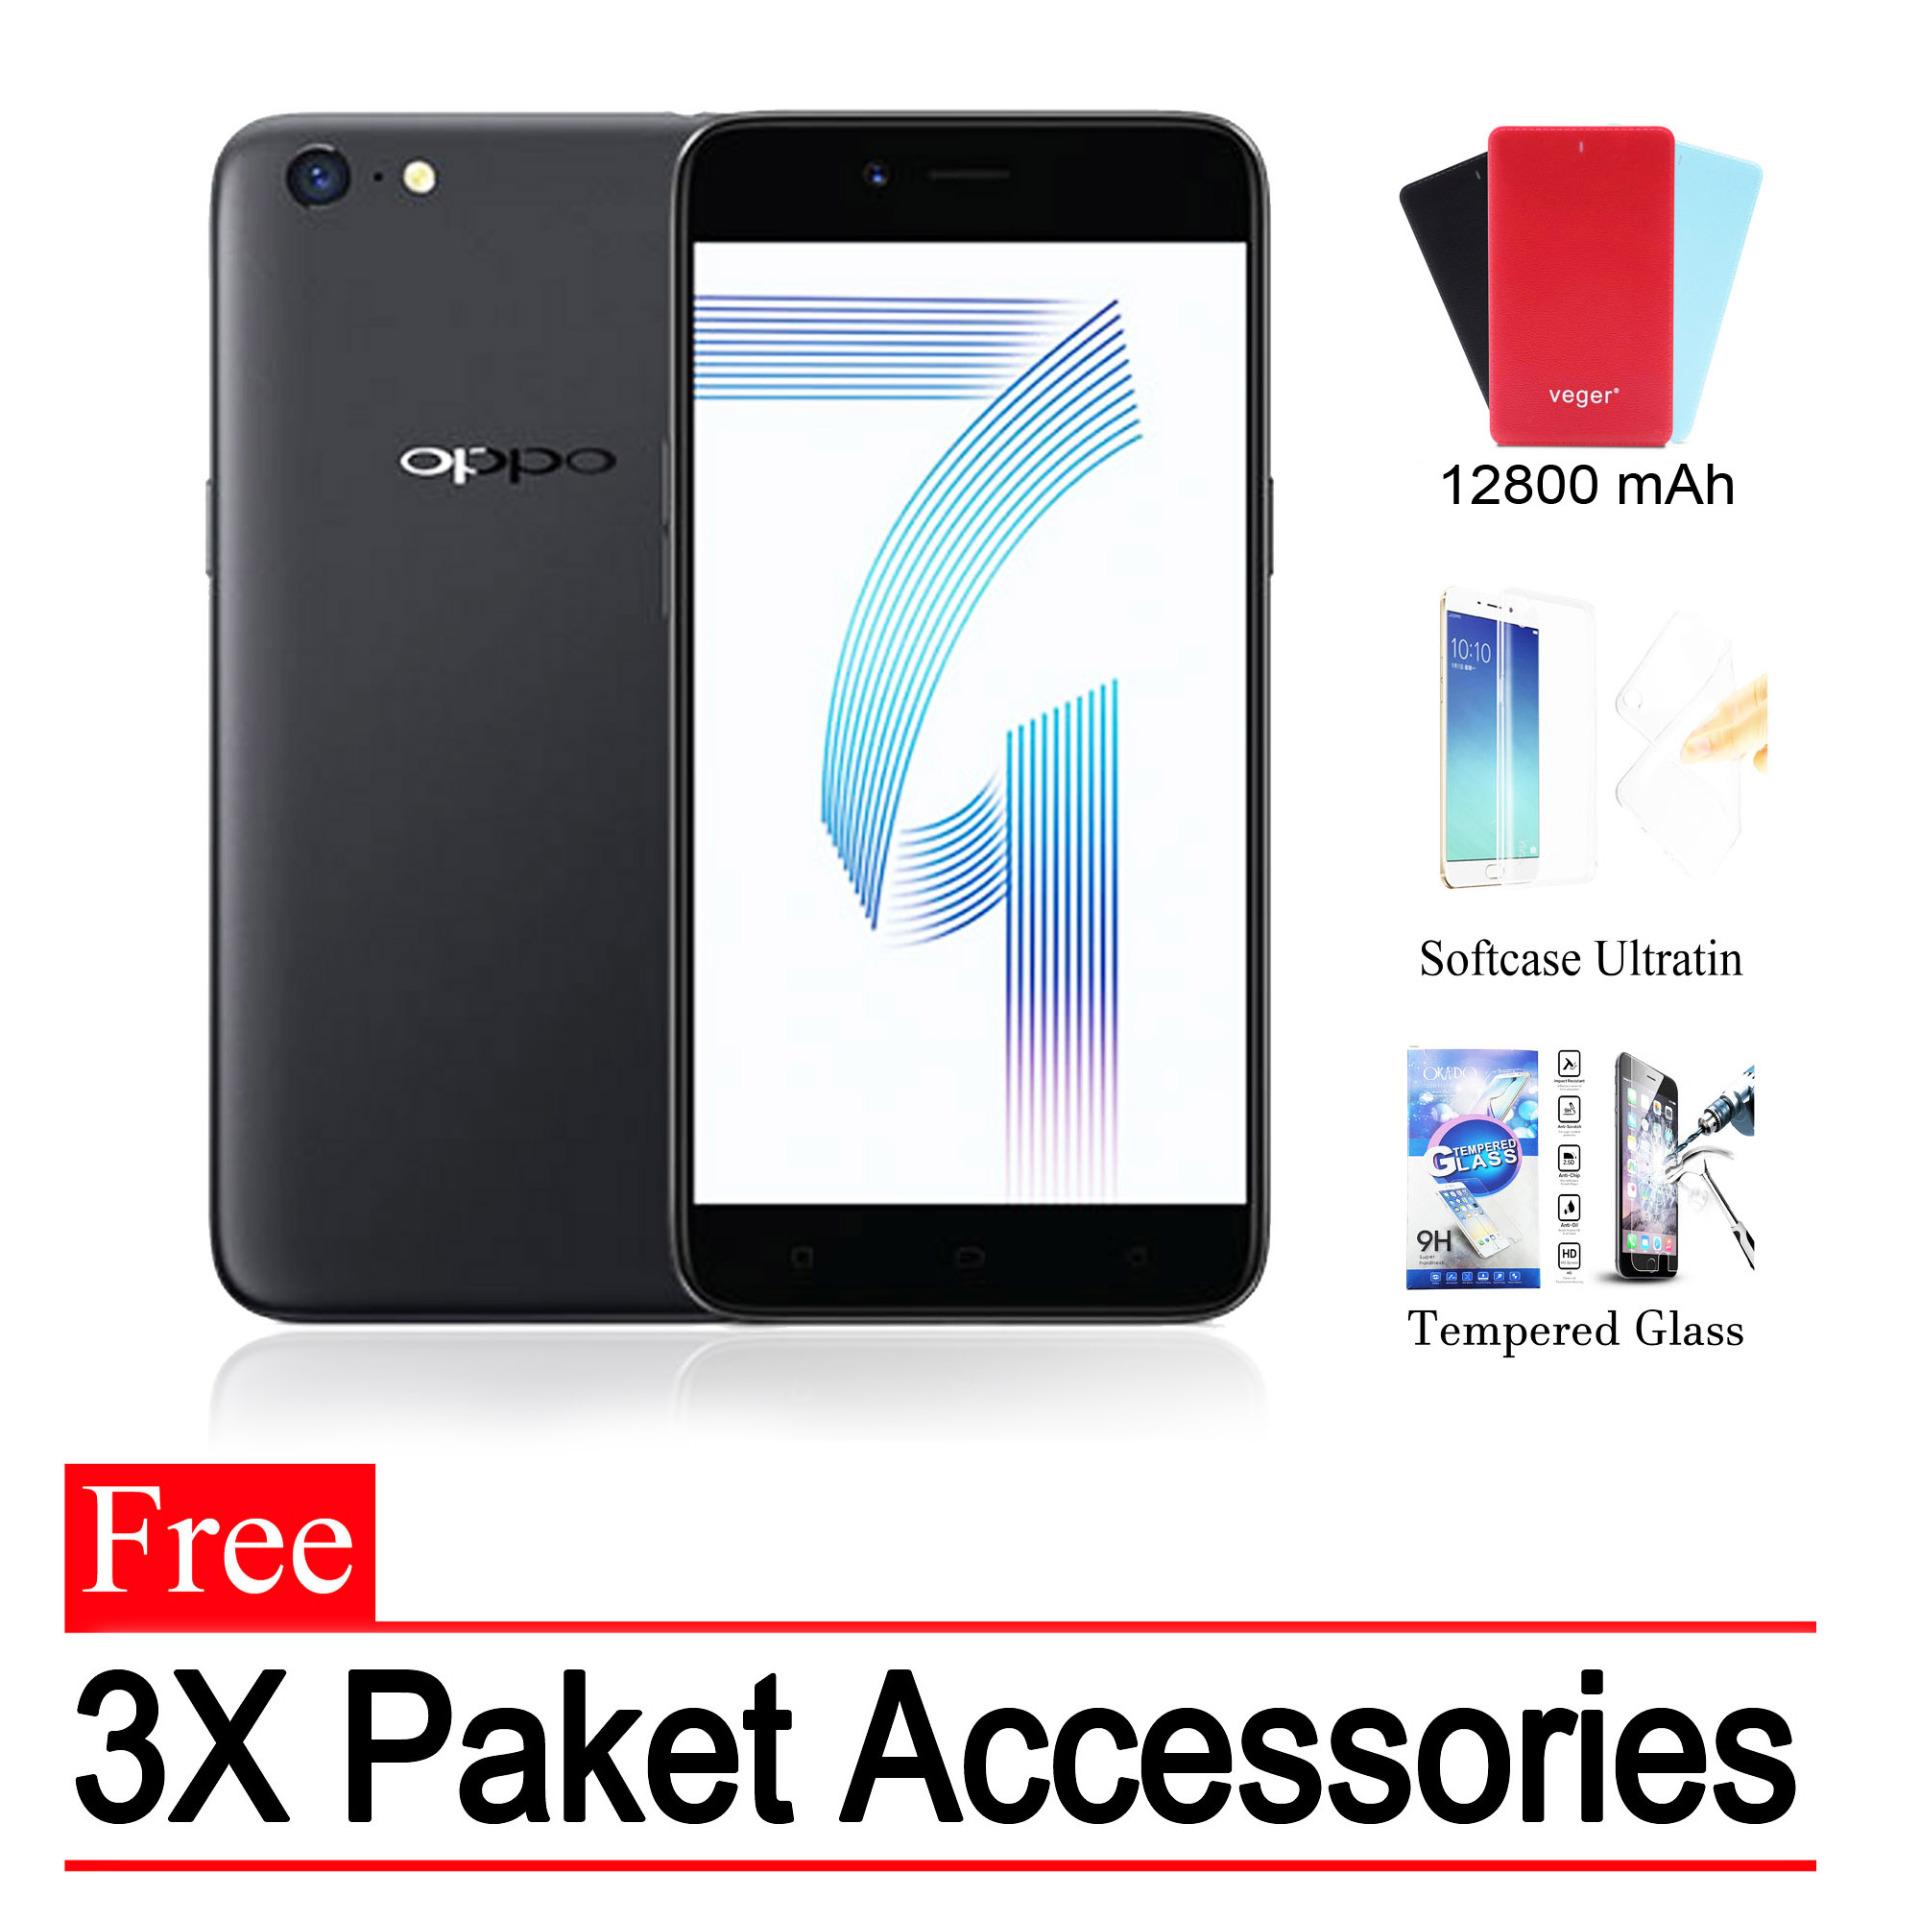 Oppo A71 Ram 2GB/16GB (Free 3x Paket Accessories) Black Smartphone